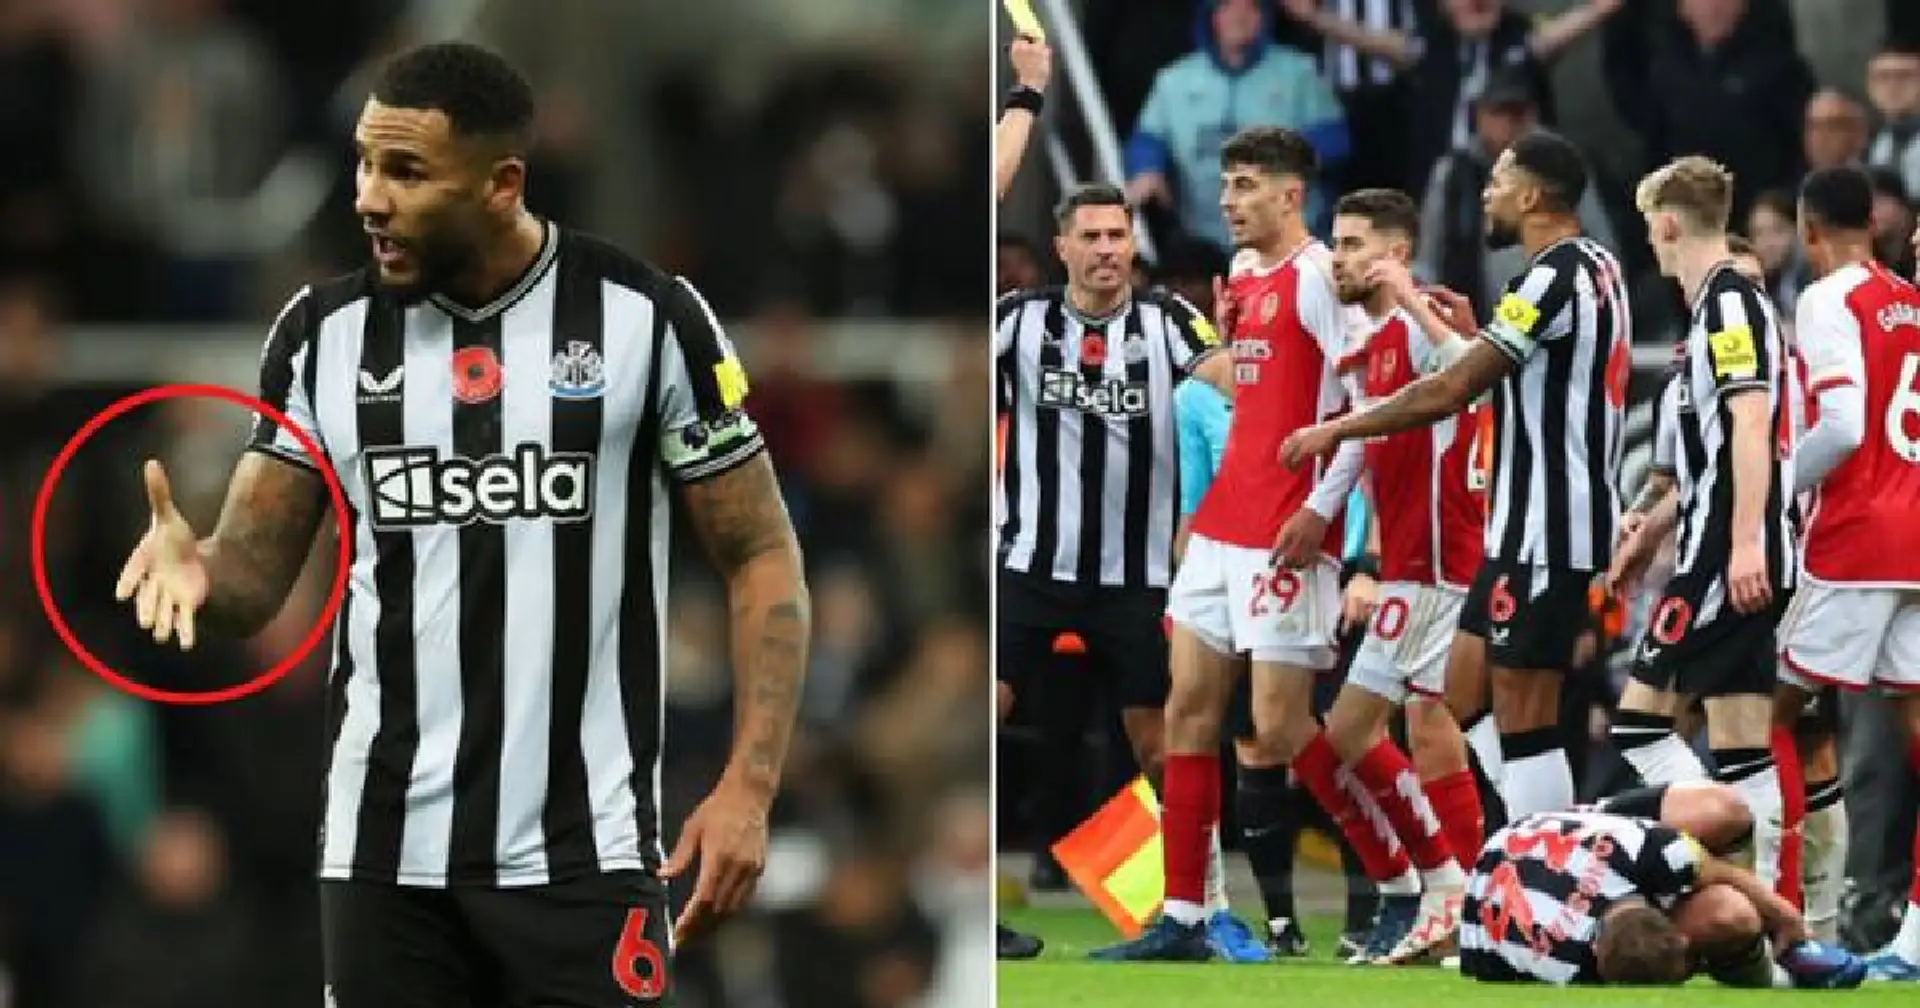 'I'm so glad we beat them': Newcastle's Lascelles slams Arsenal player over 'unacceptable' attitude 